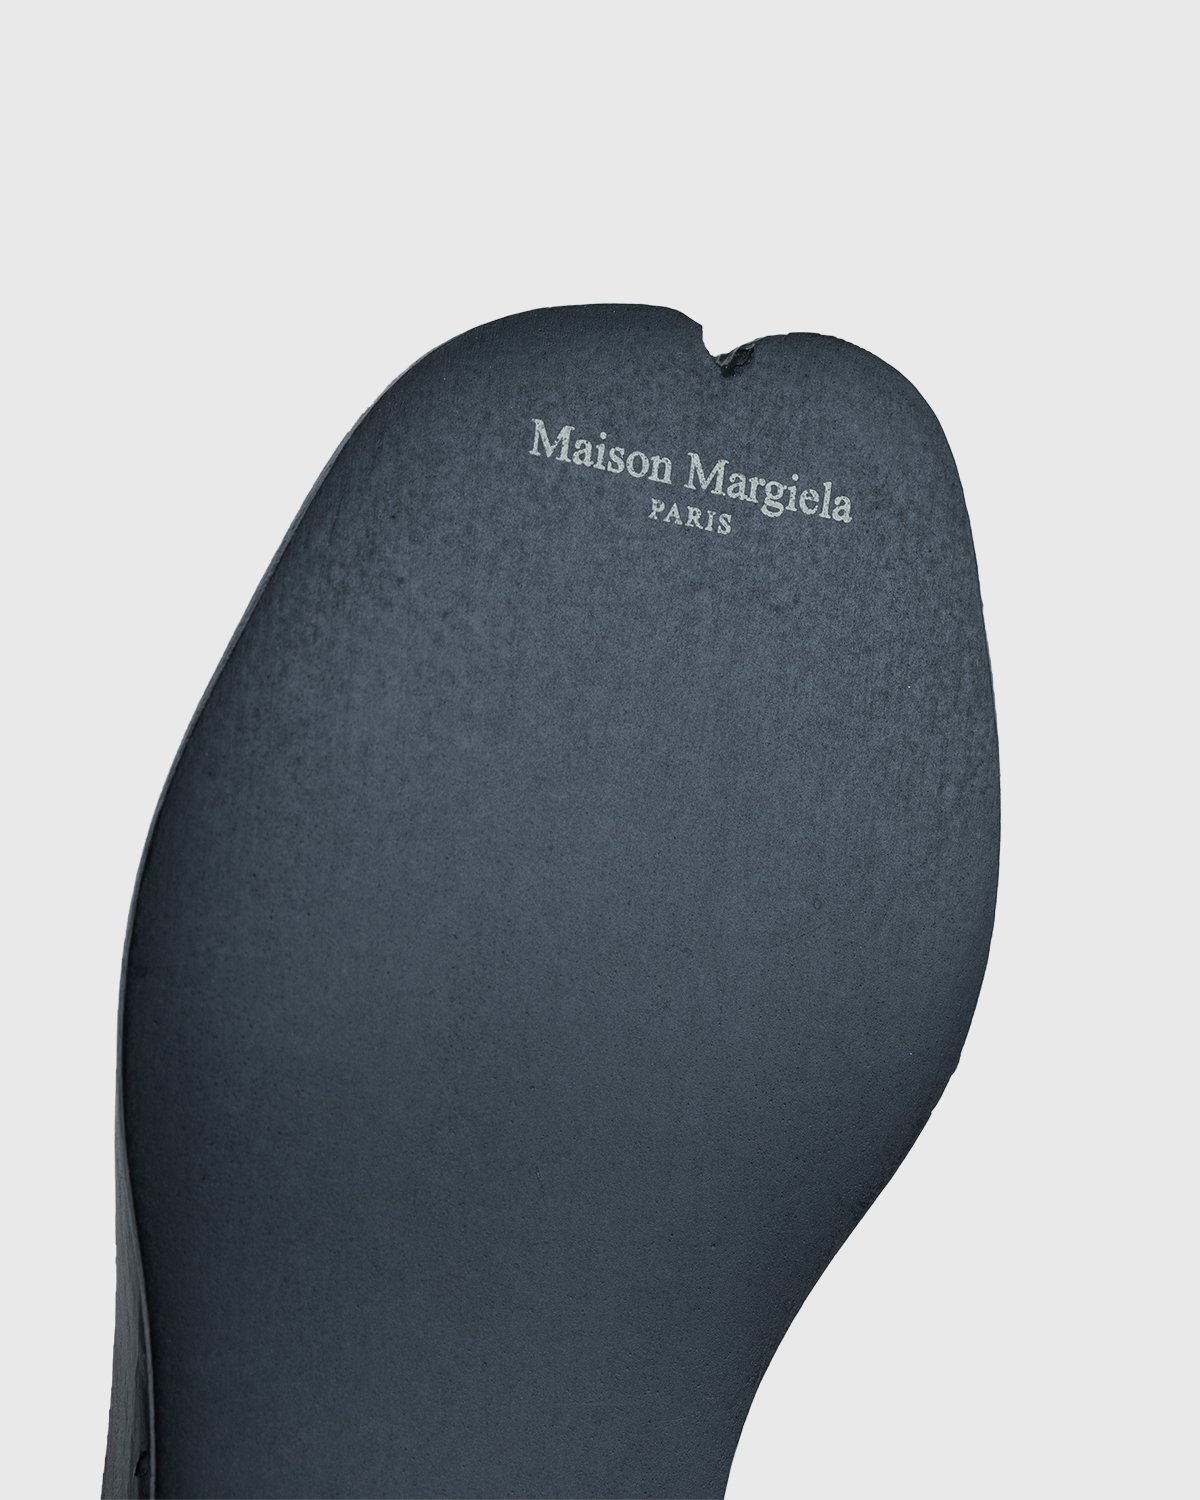 Maison Margiela - Tabi Key Ring Black - Accessories - Black - Image 4